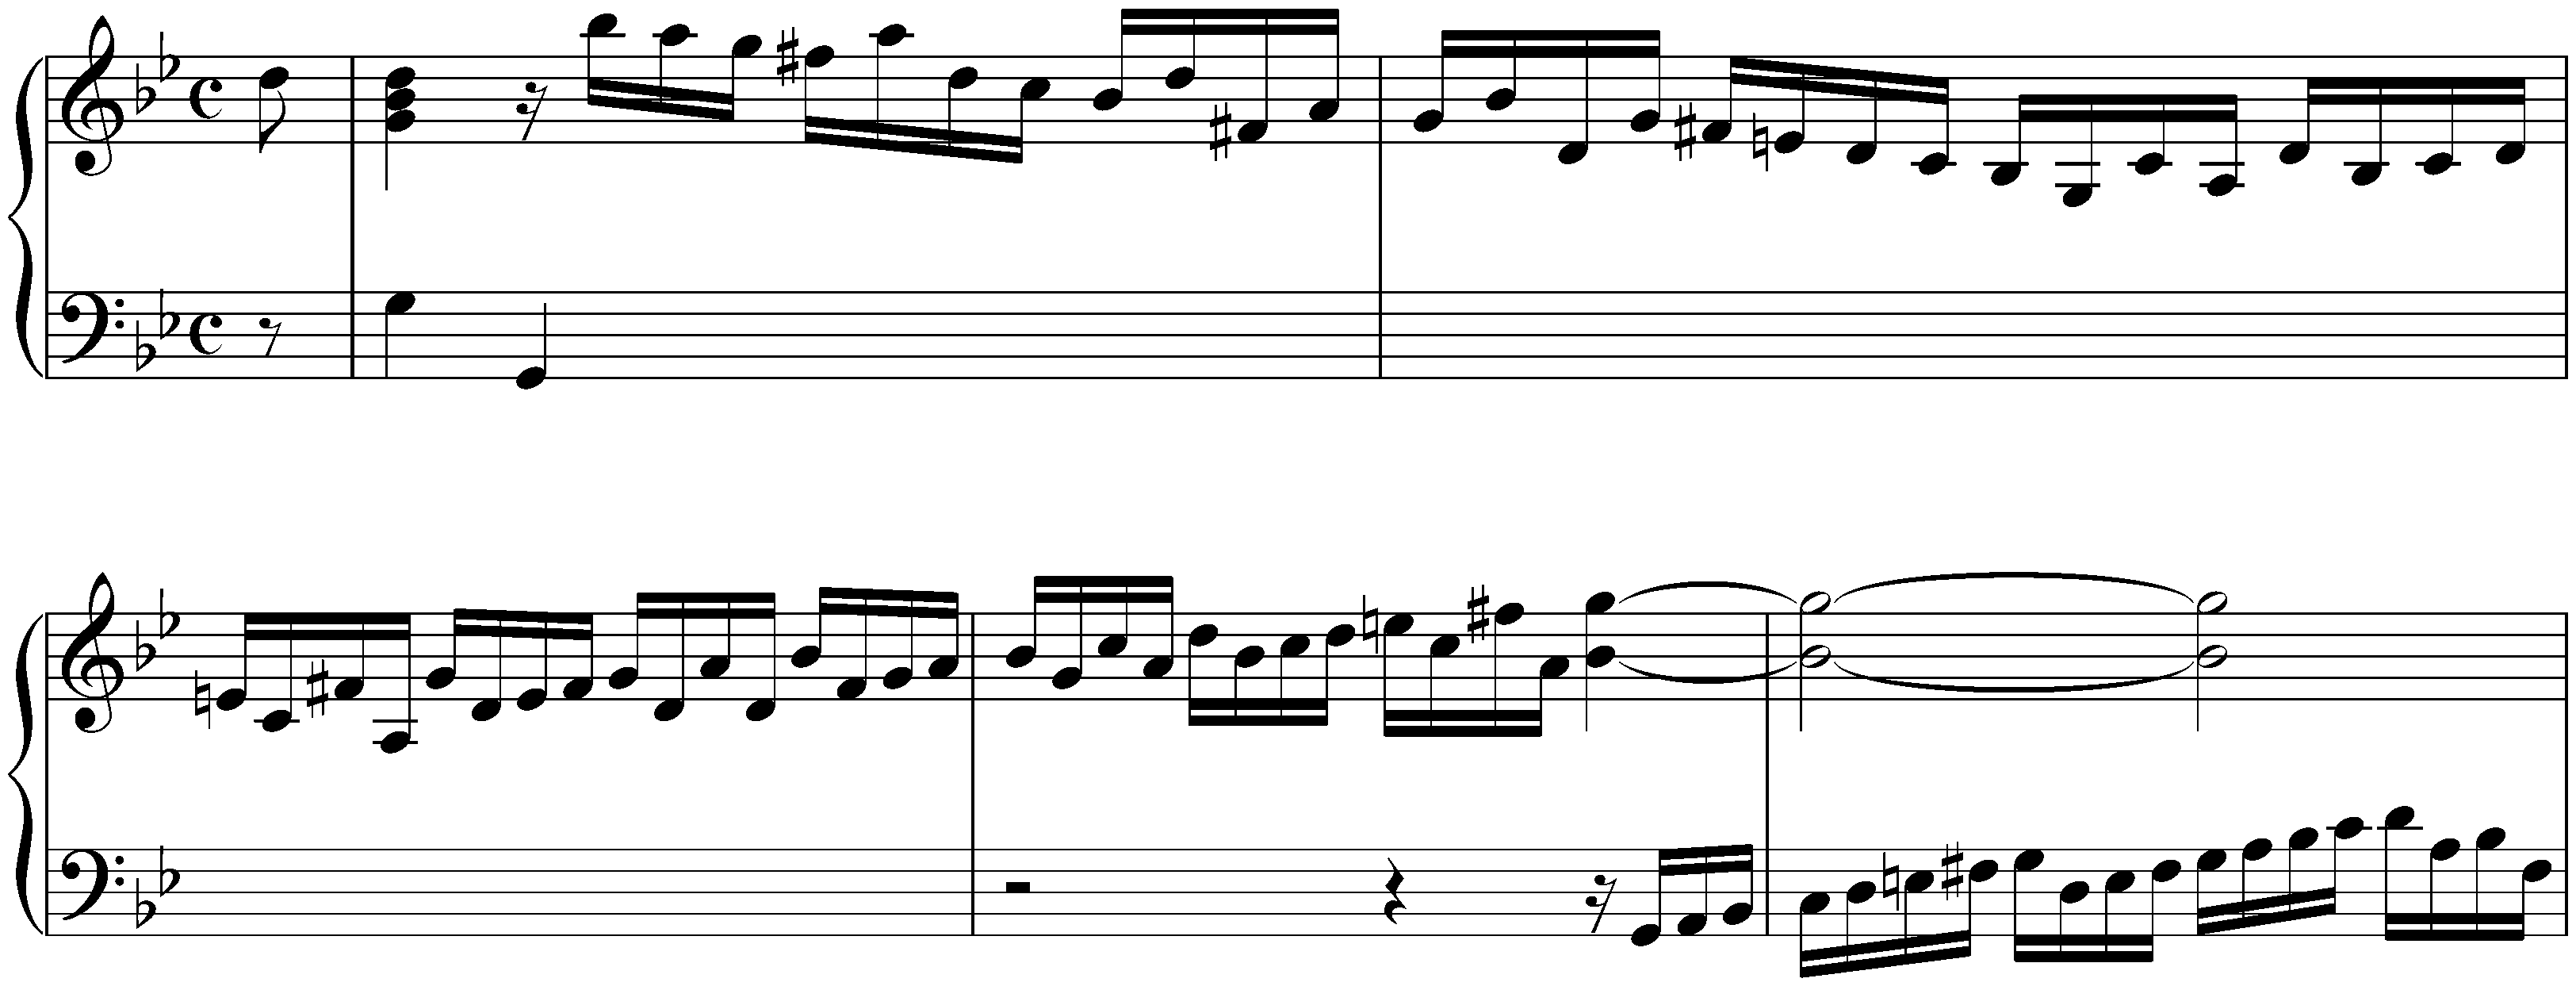 Suite in G minor, HWV 439; 1. Allemande